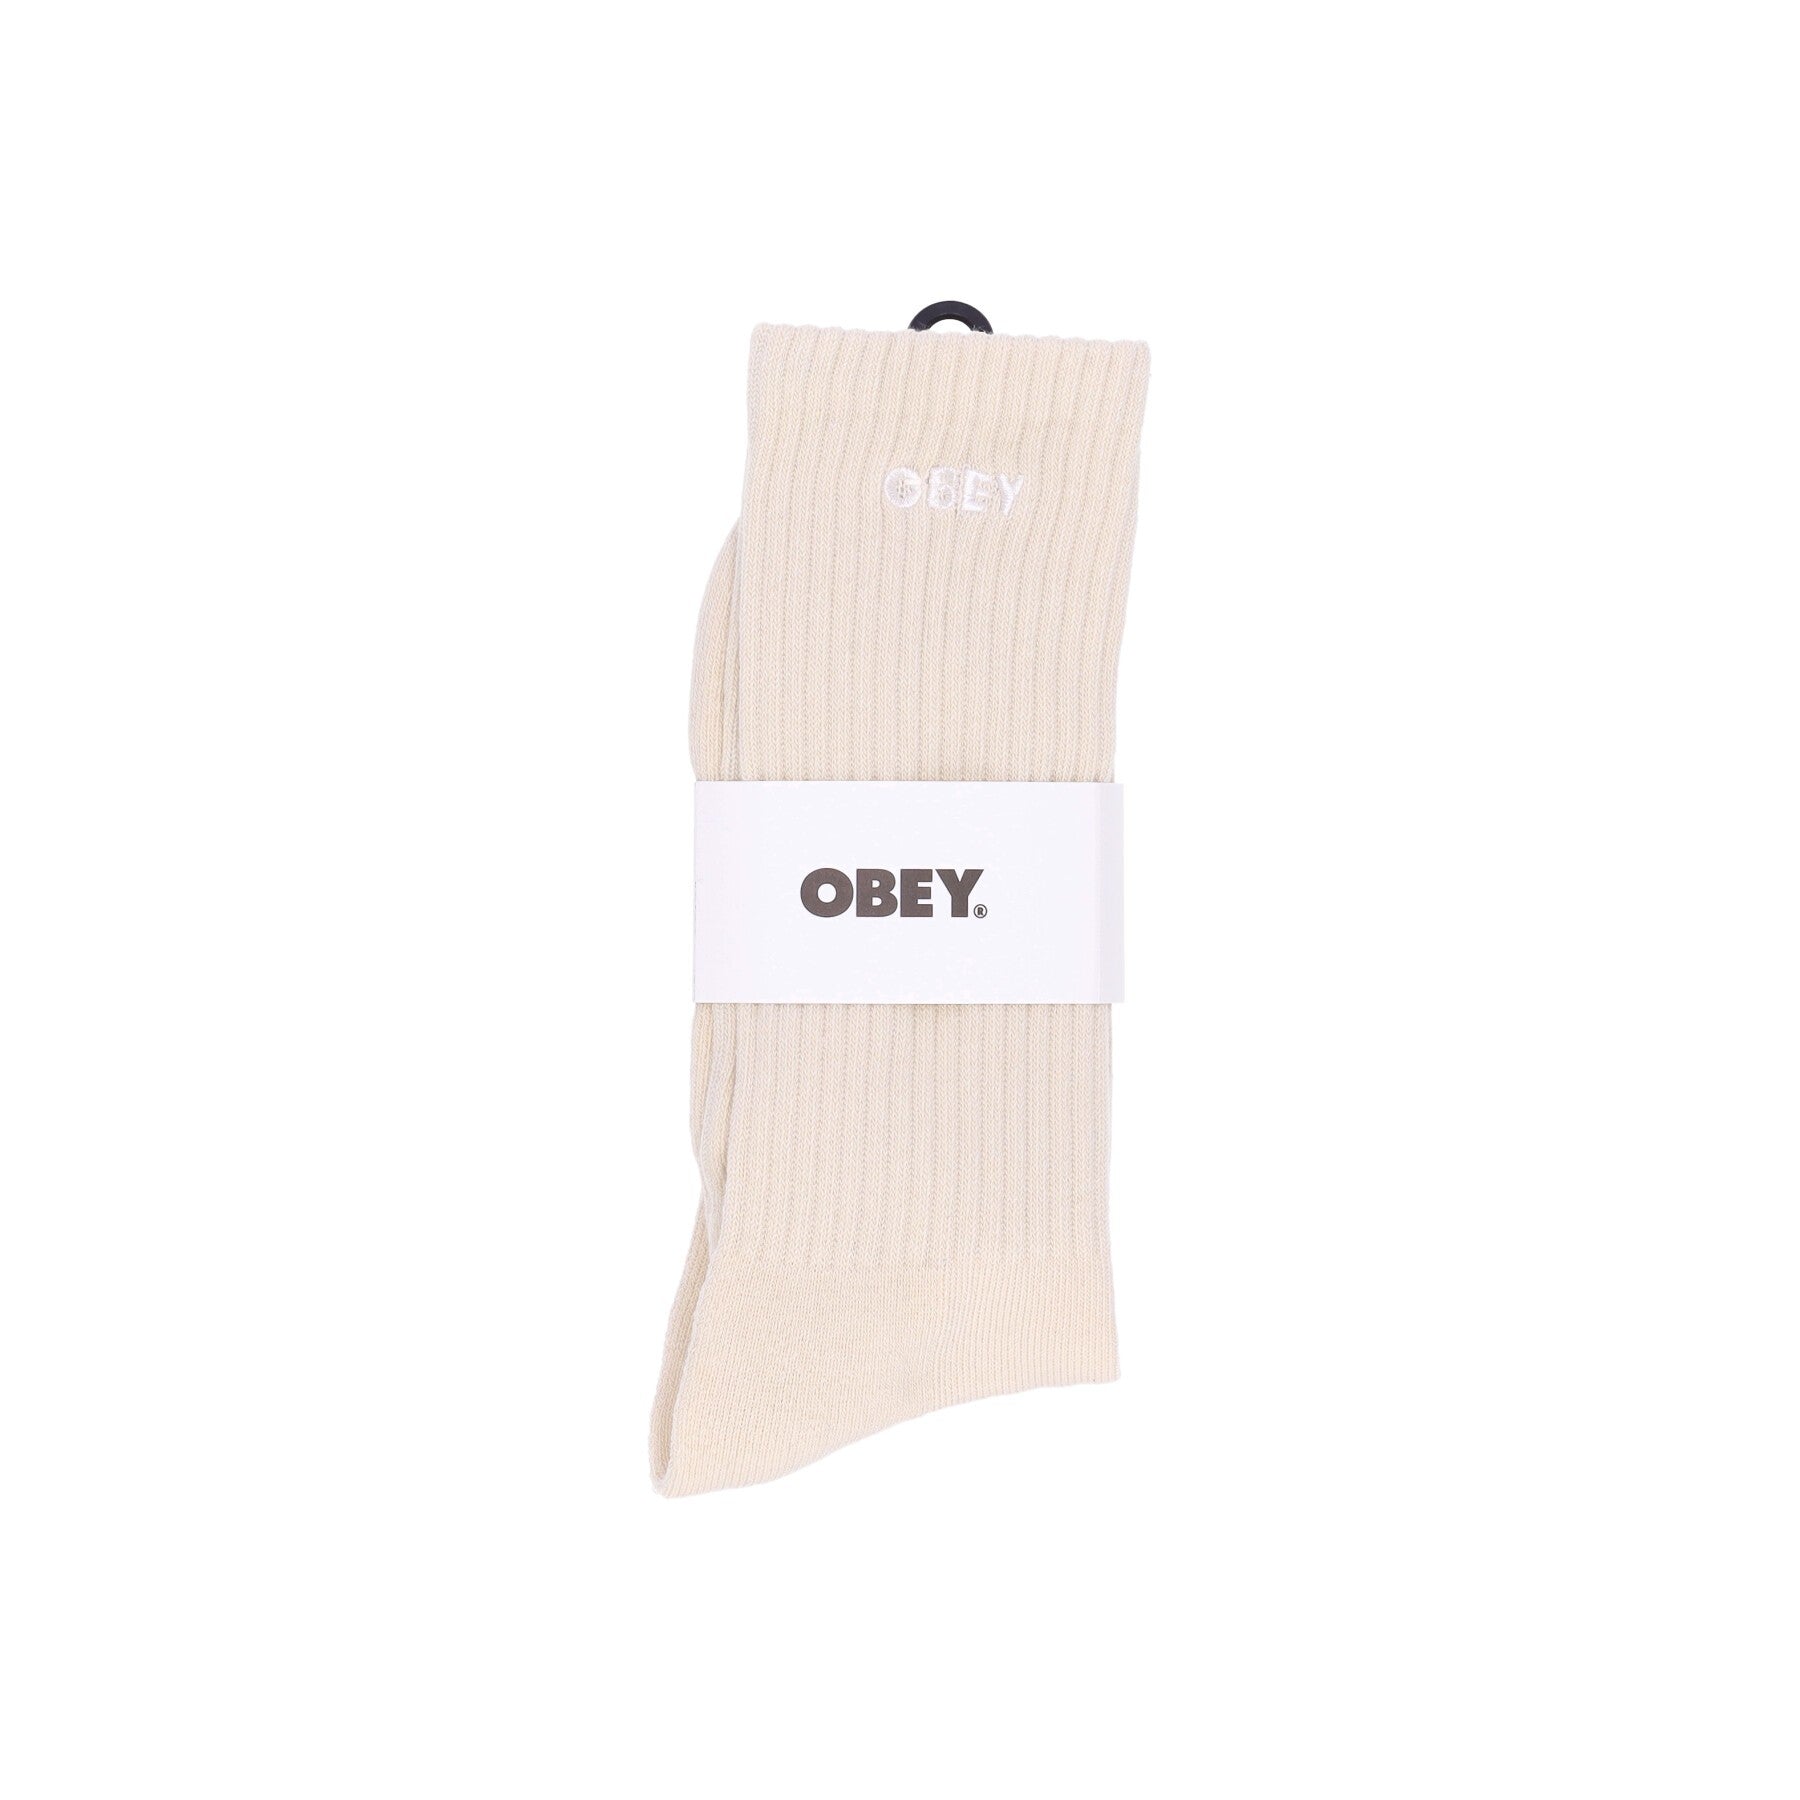 Obey, Calza Media Uomo Bold Socks, Unbleached